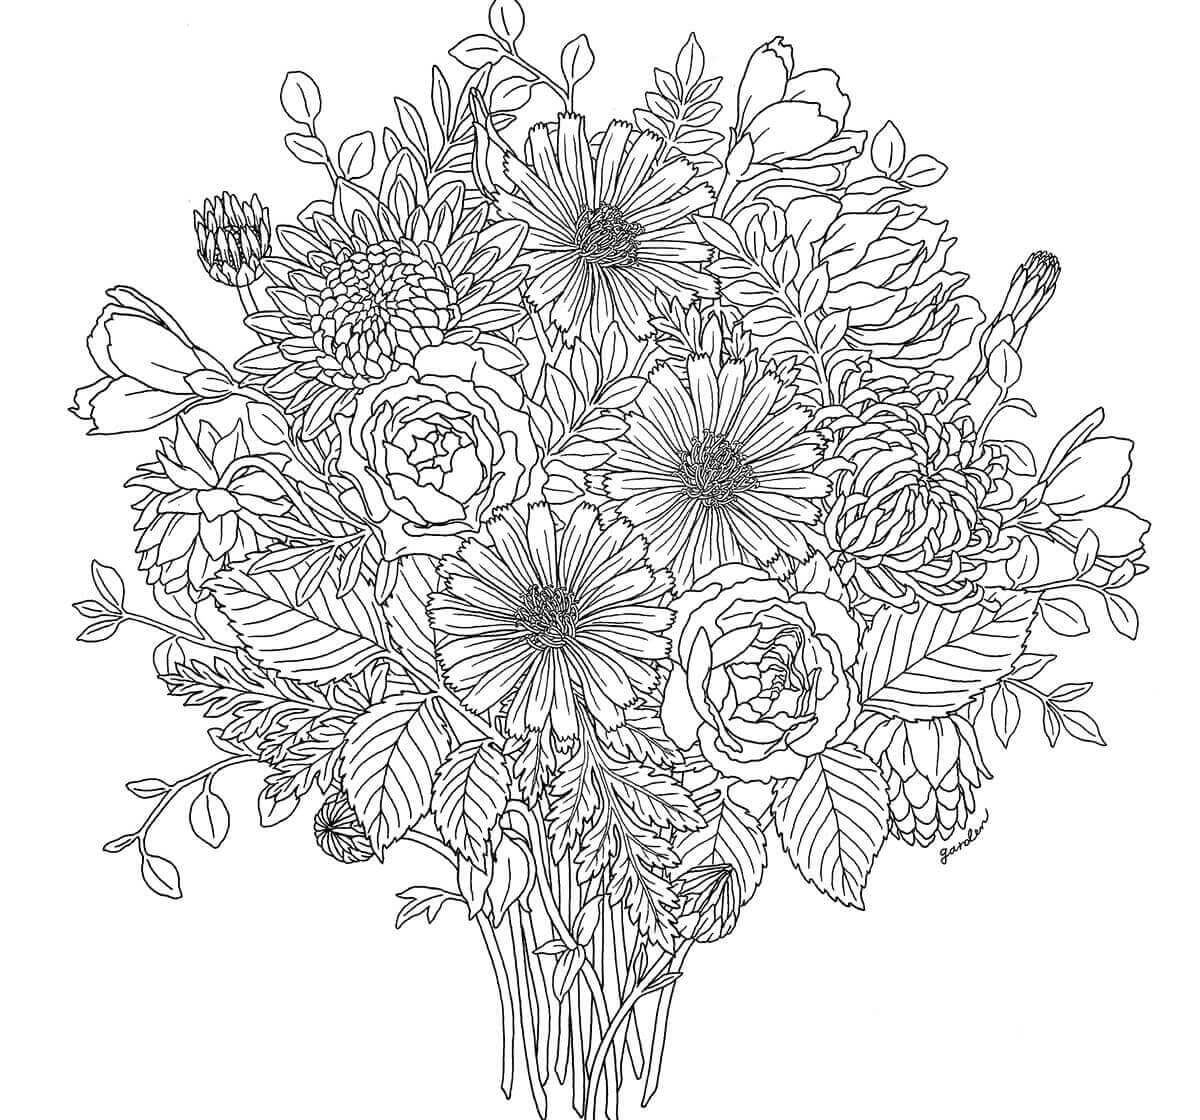 Målarbild Blommig Mandala